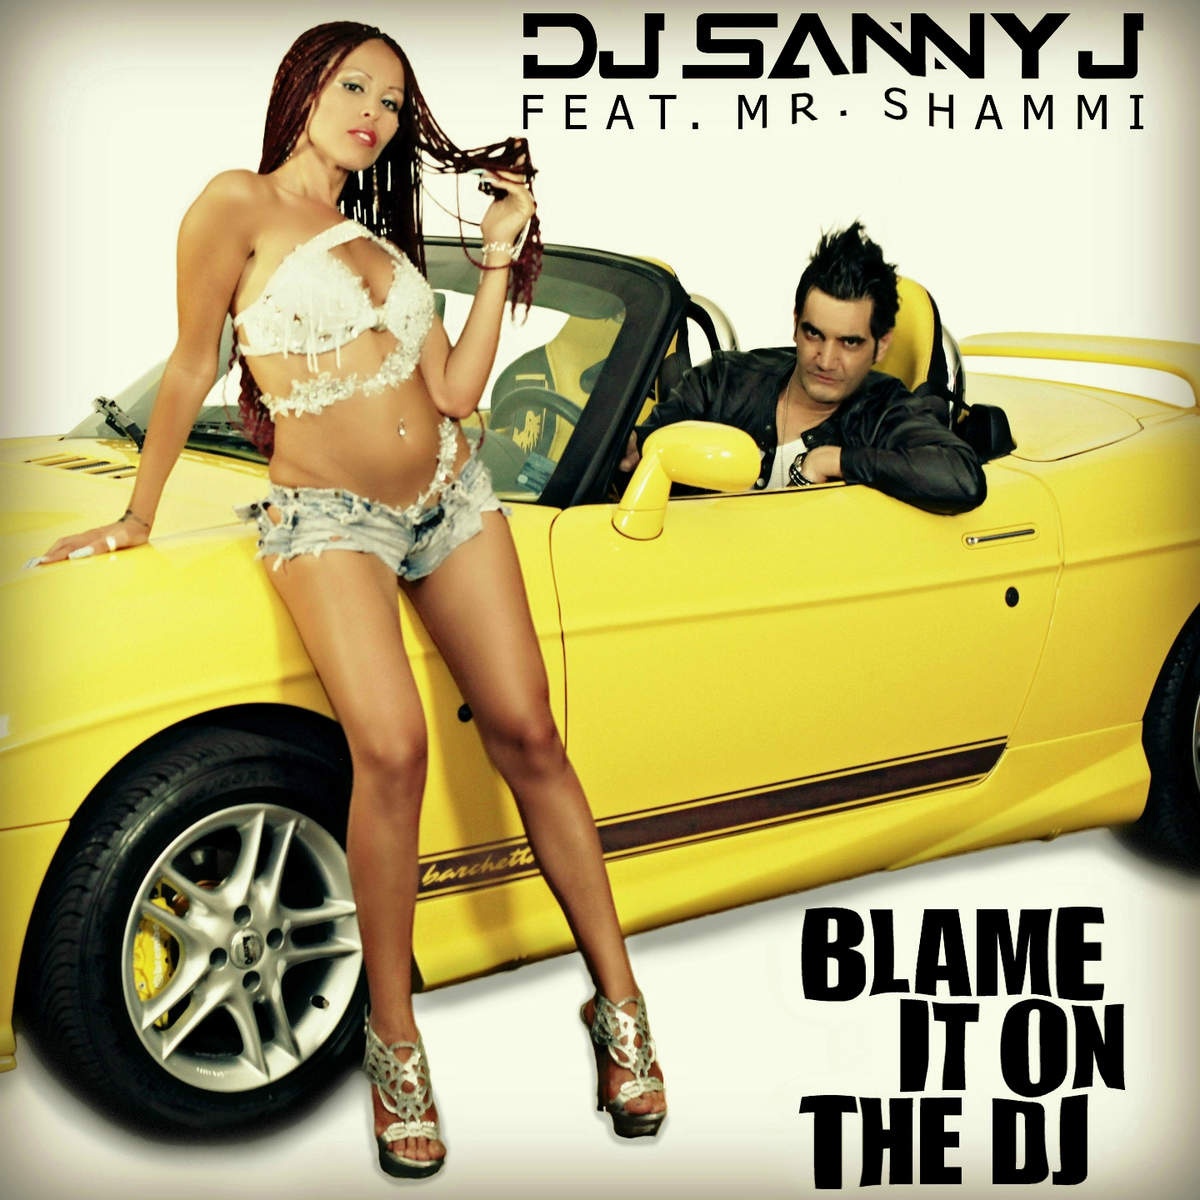 Blame It On the DJ (Original Video Mix)